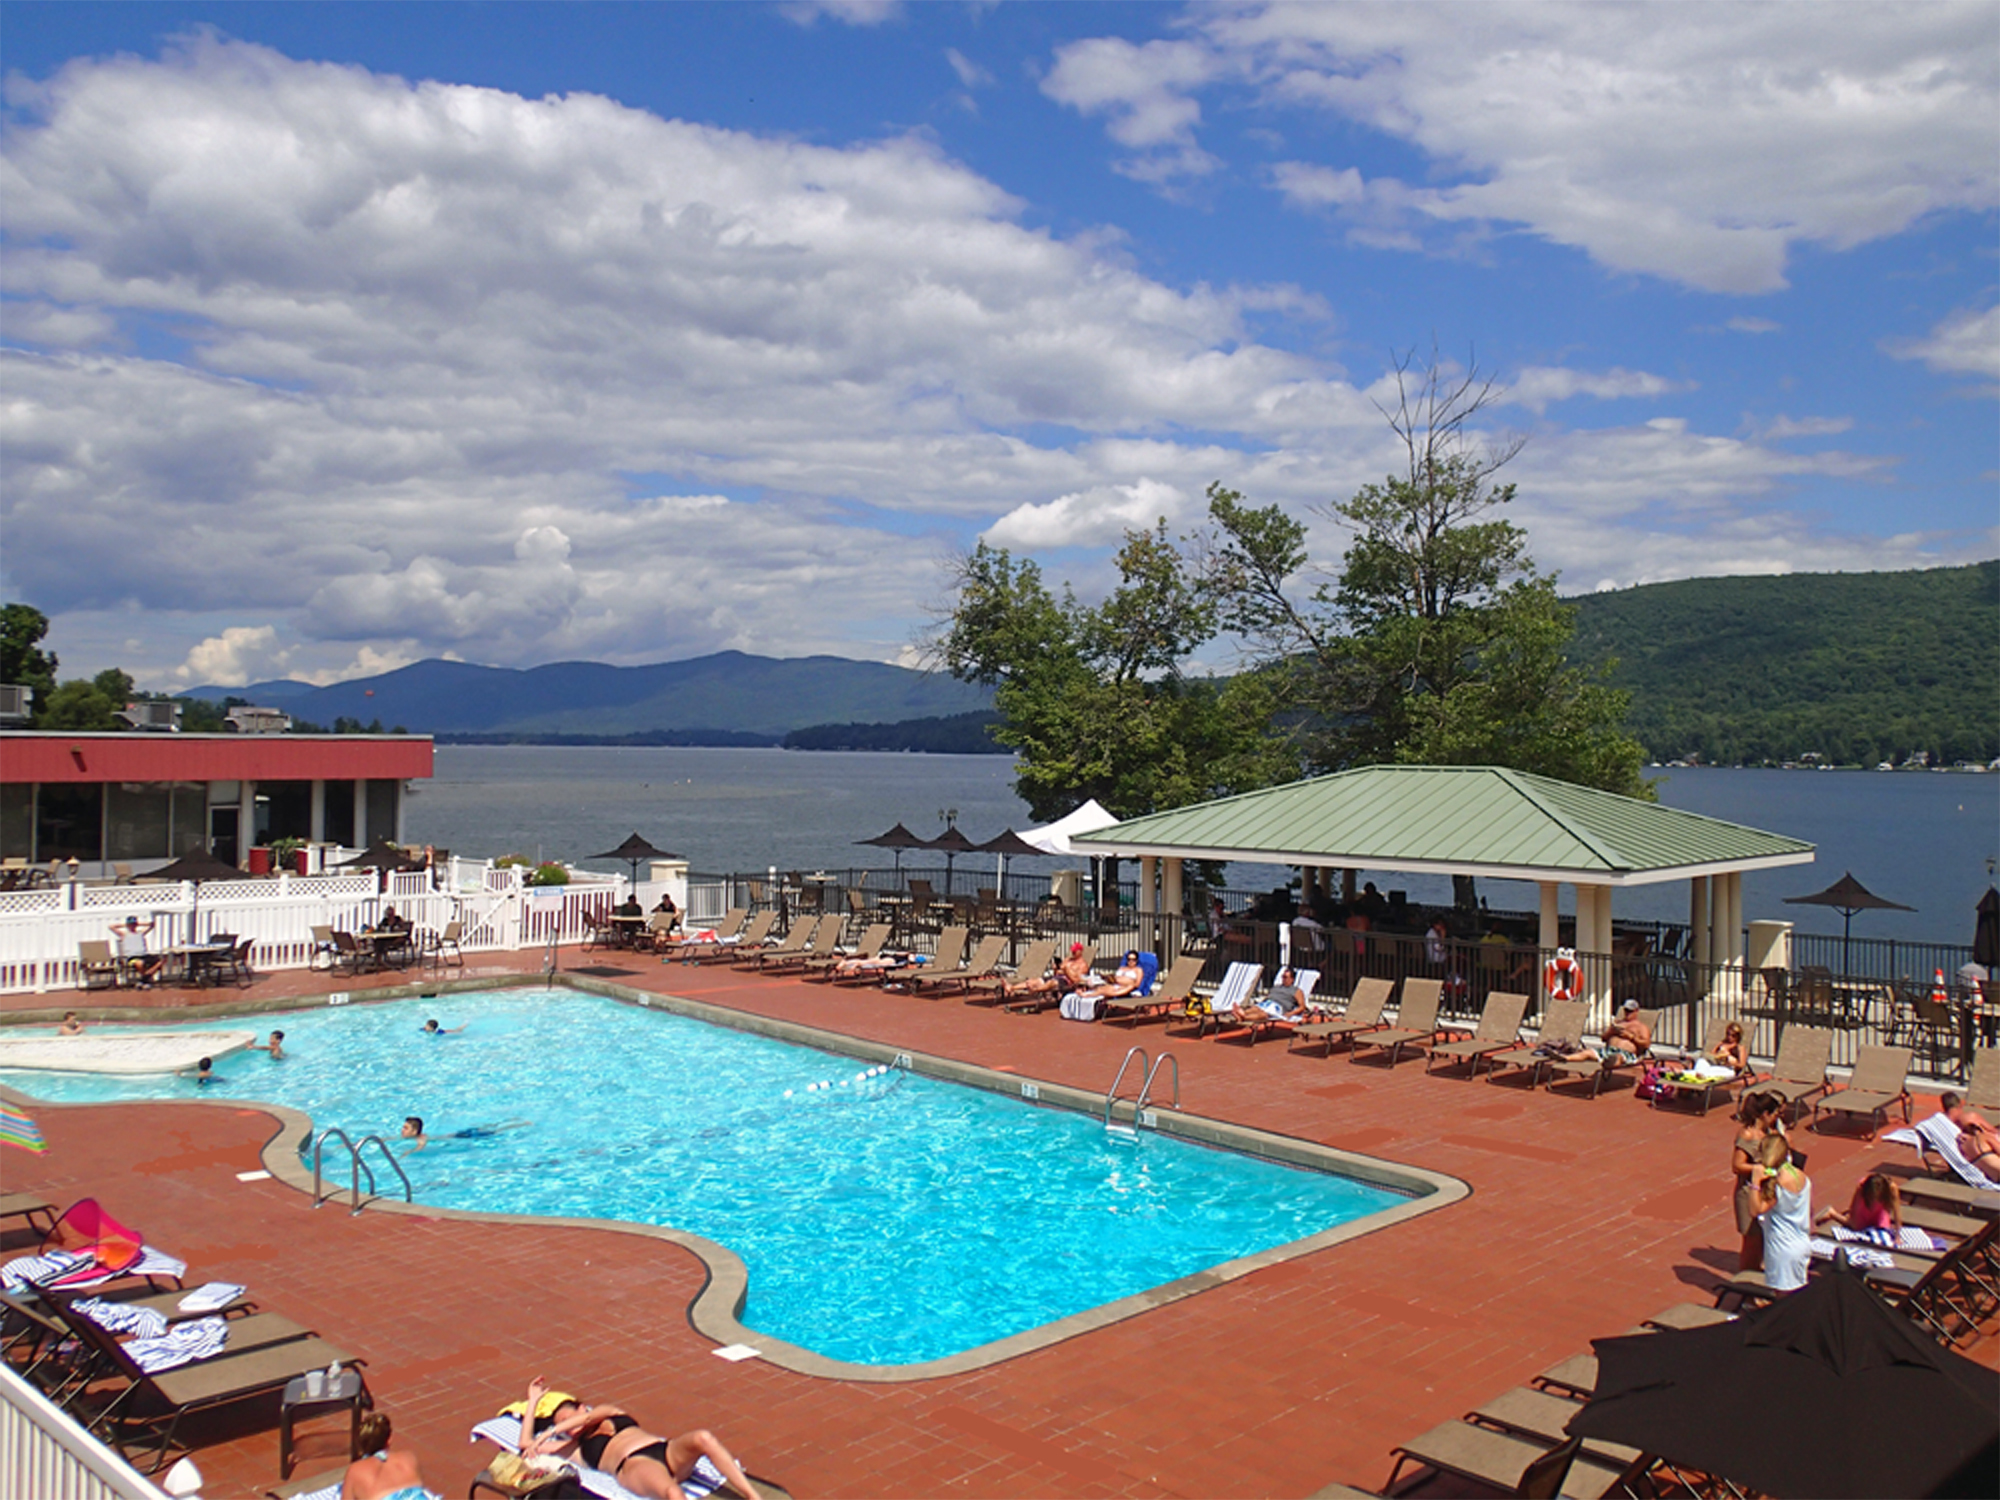 Adirondack August The Lakeside Resort, Lake NY